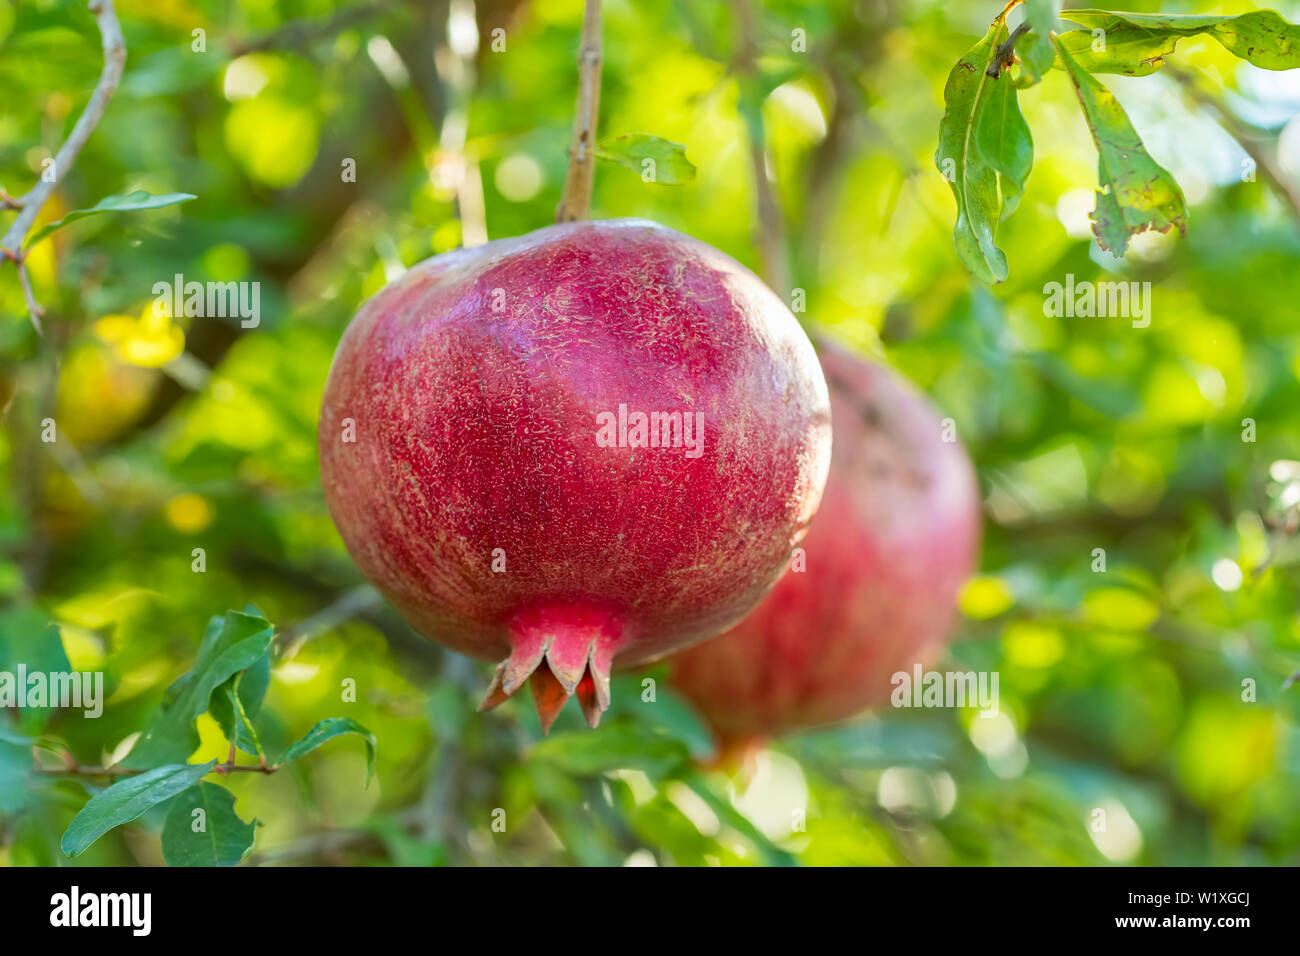 Ripe pomegranate fruits on a tree branch Stock Photo